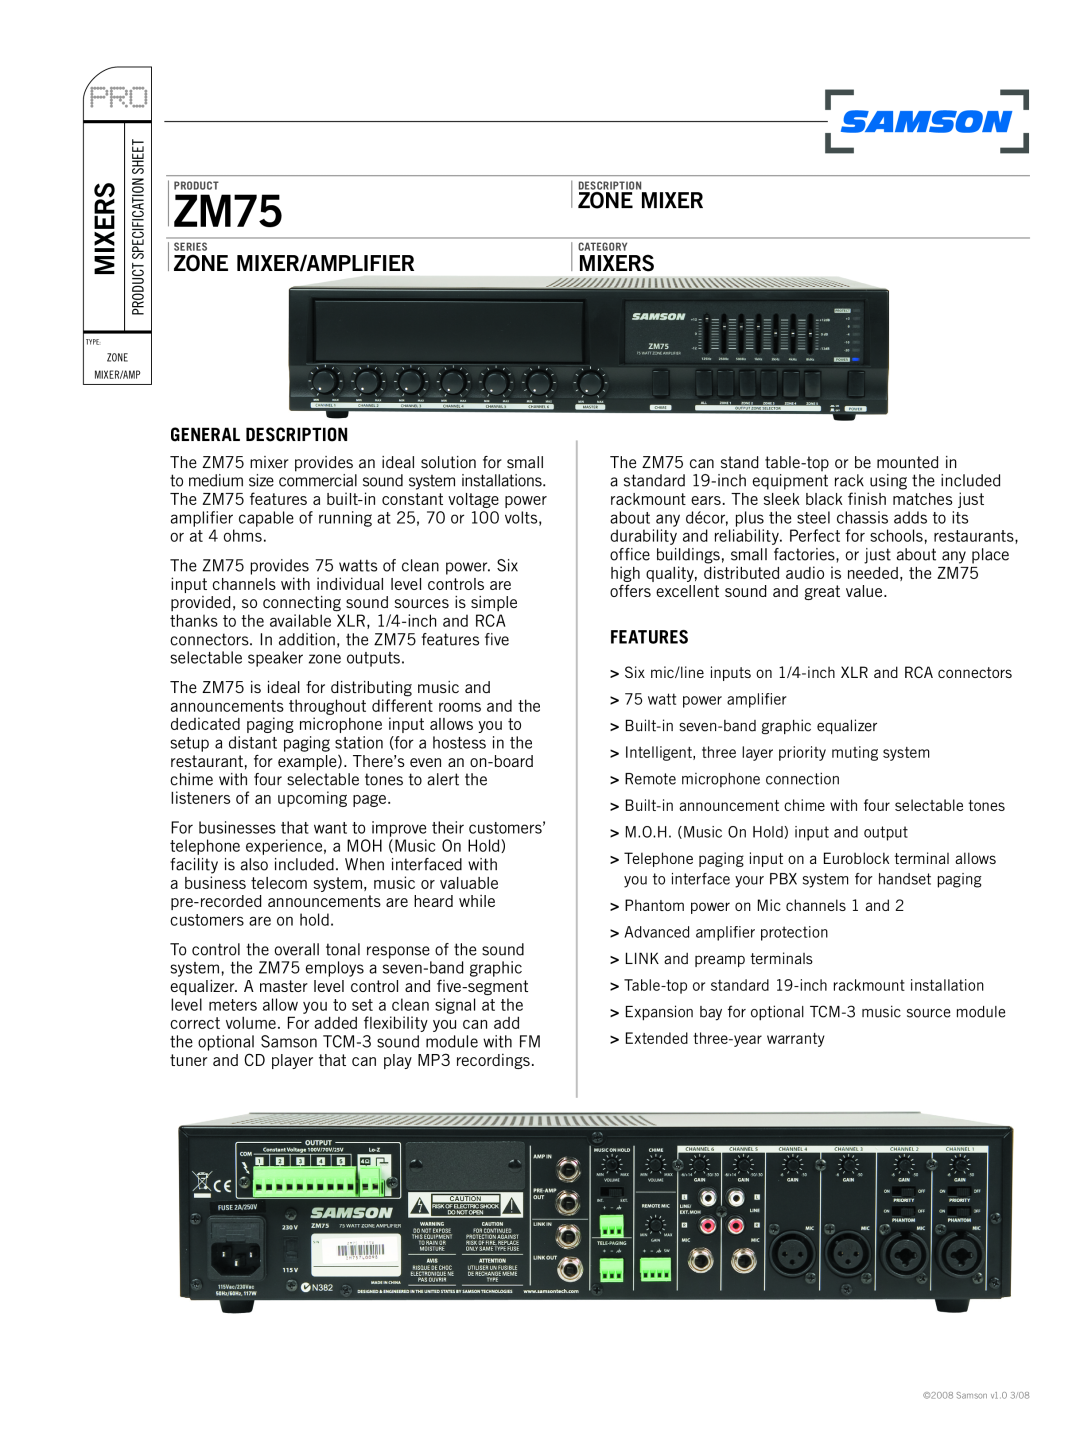 Samson ZM75 specifications General Description, Features, Zone Mixer/Amplifier, Mixers 